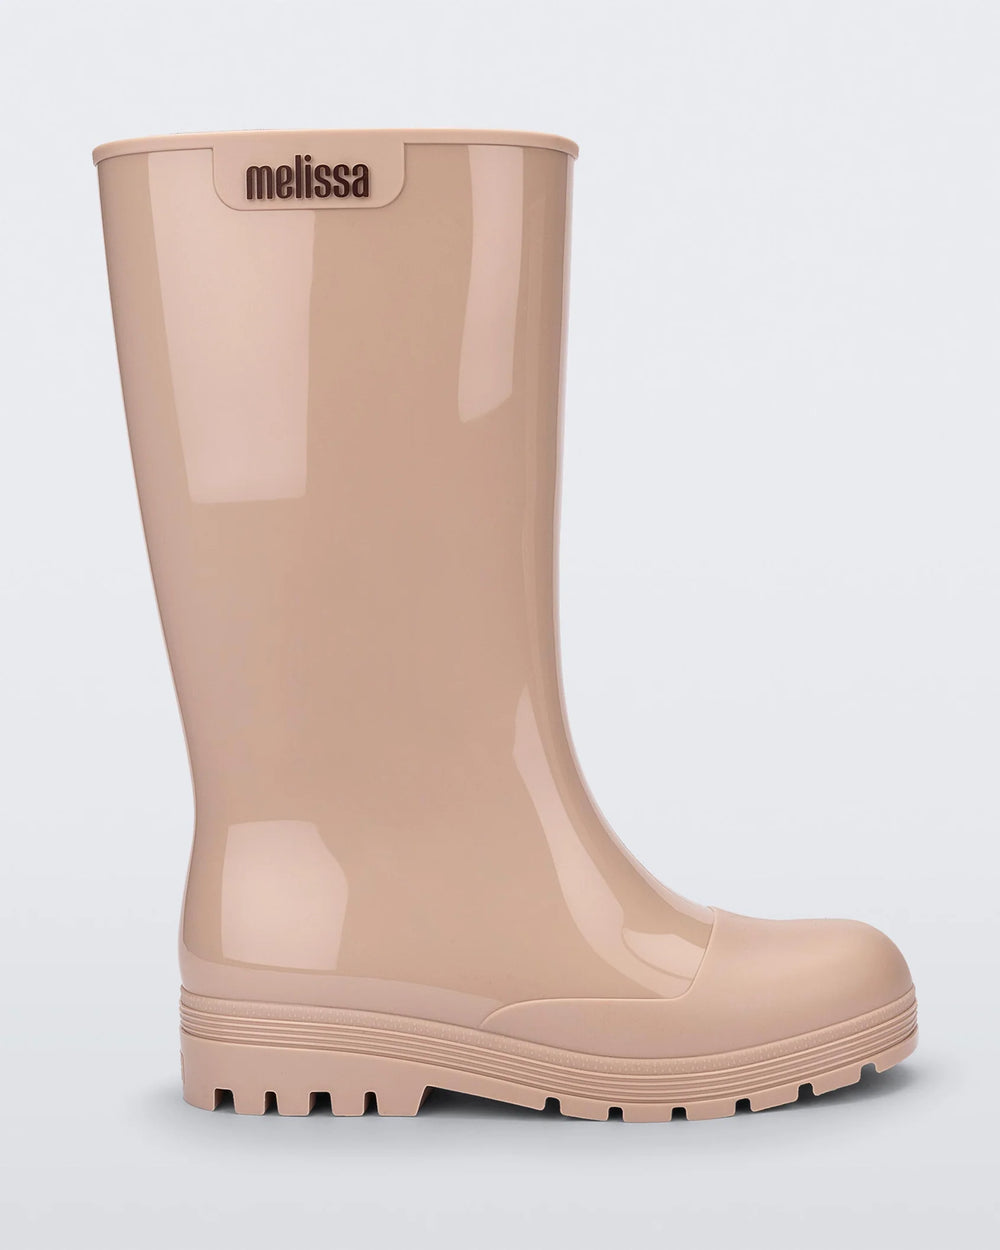 Melissa Welly Waterproof Iconic look boot